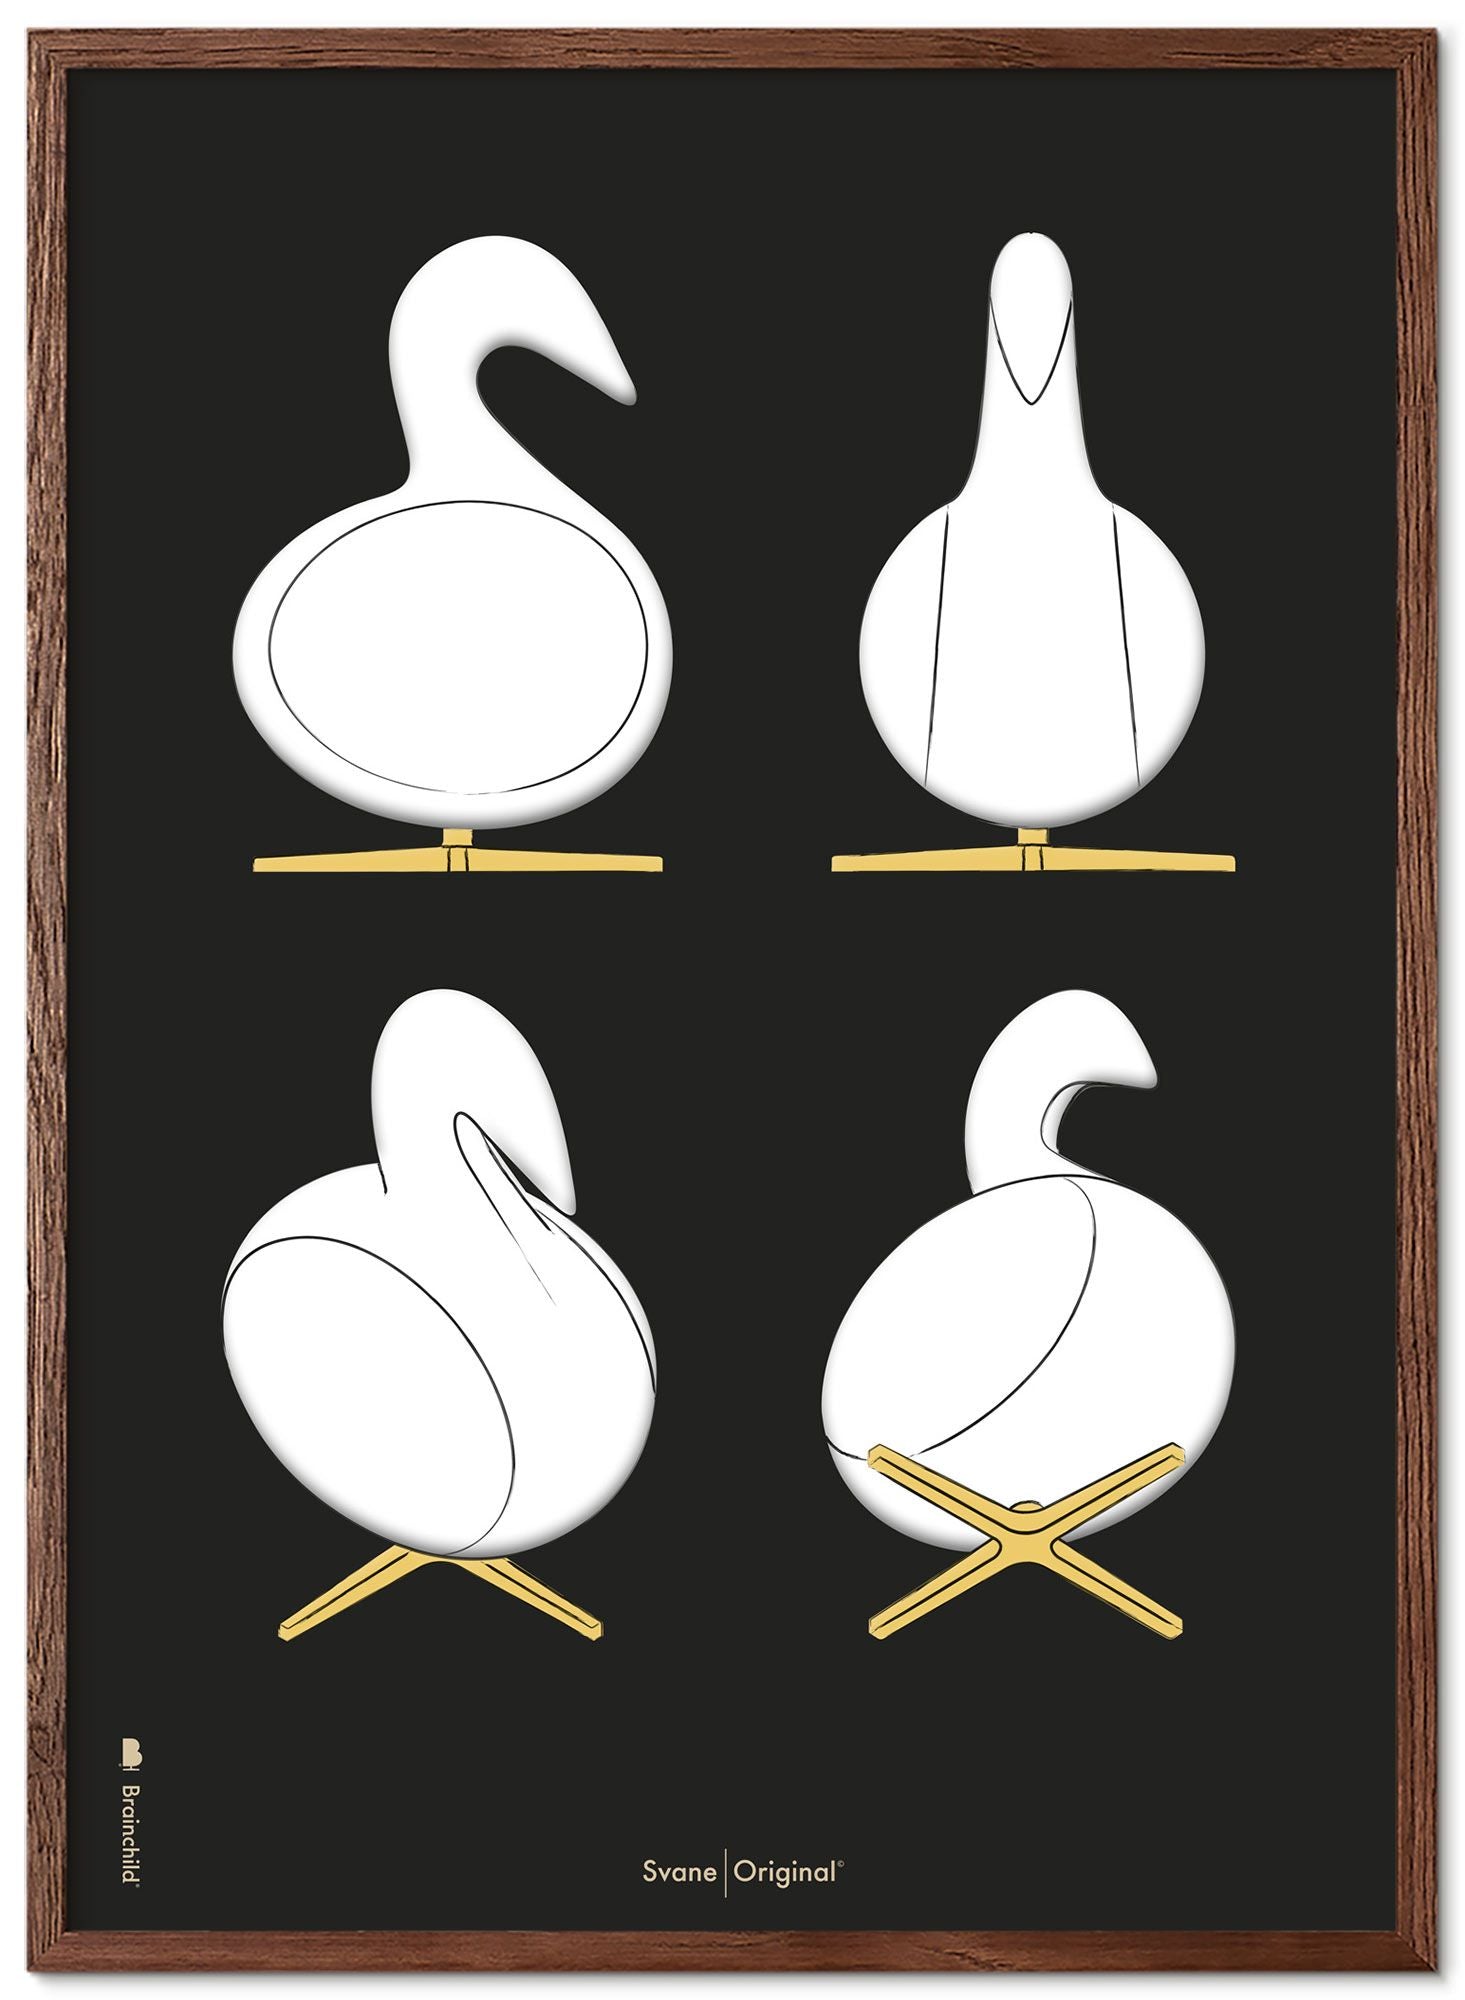 Brainchild Swan Design Sketches Poster Frame Made Of Dark Wood 50x70 Cm, Black Background